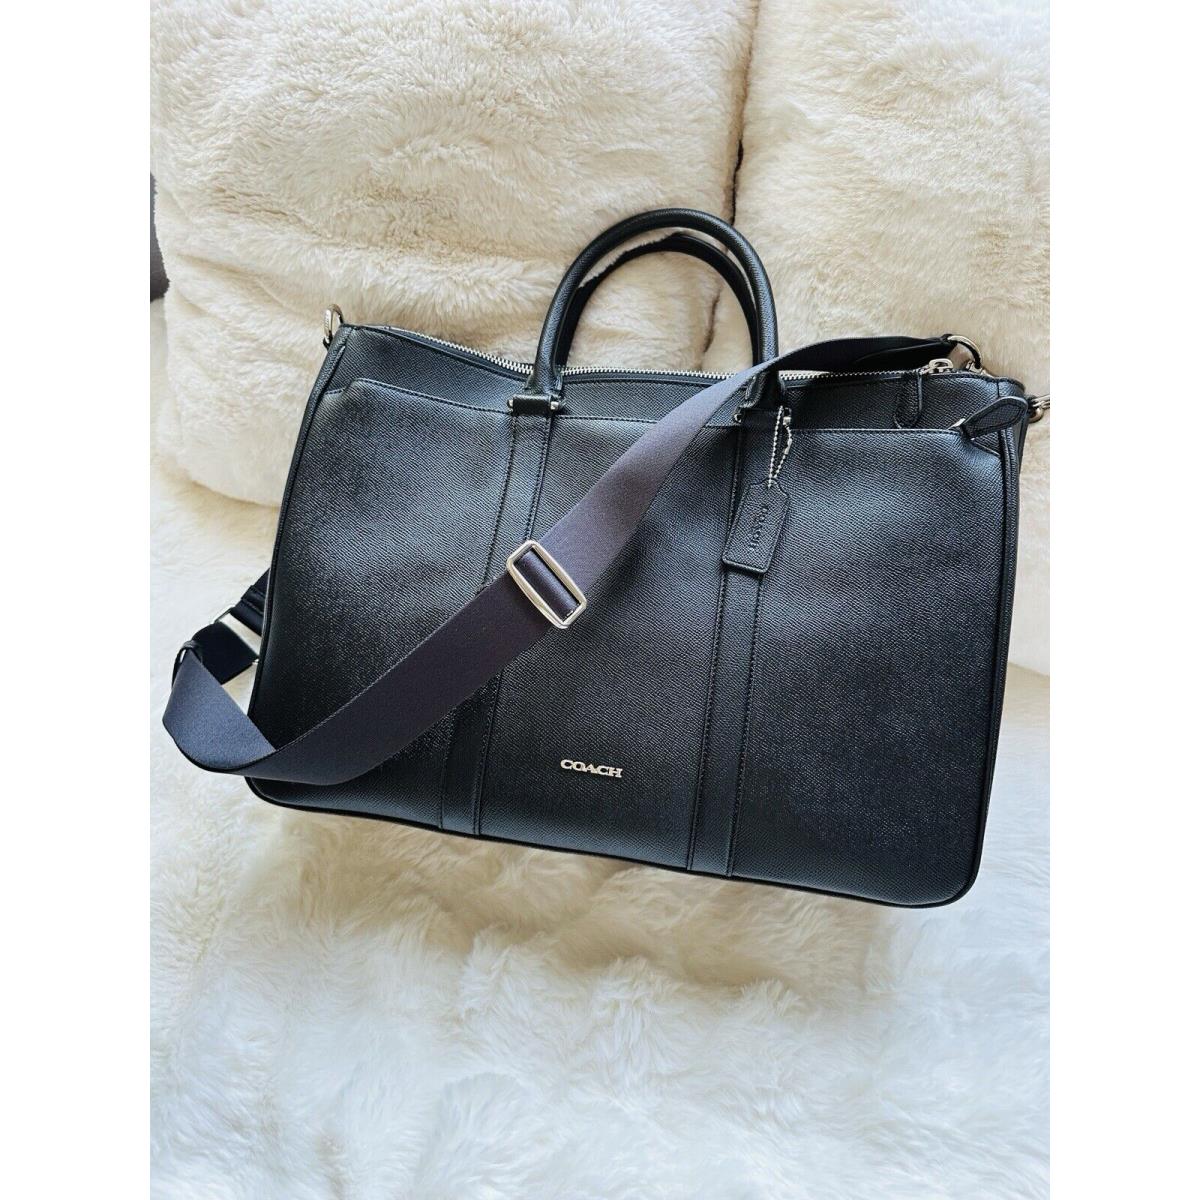 Coach Men s Black Leather Briefcase Laptop Handbag F59141 Metropolitan